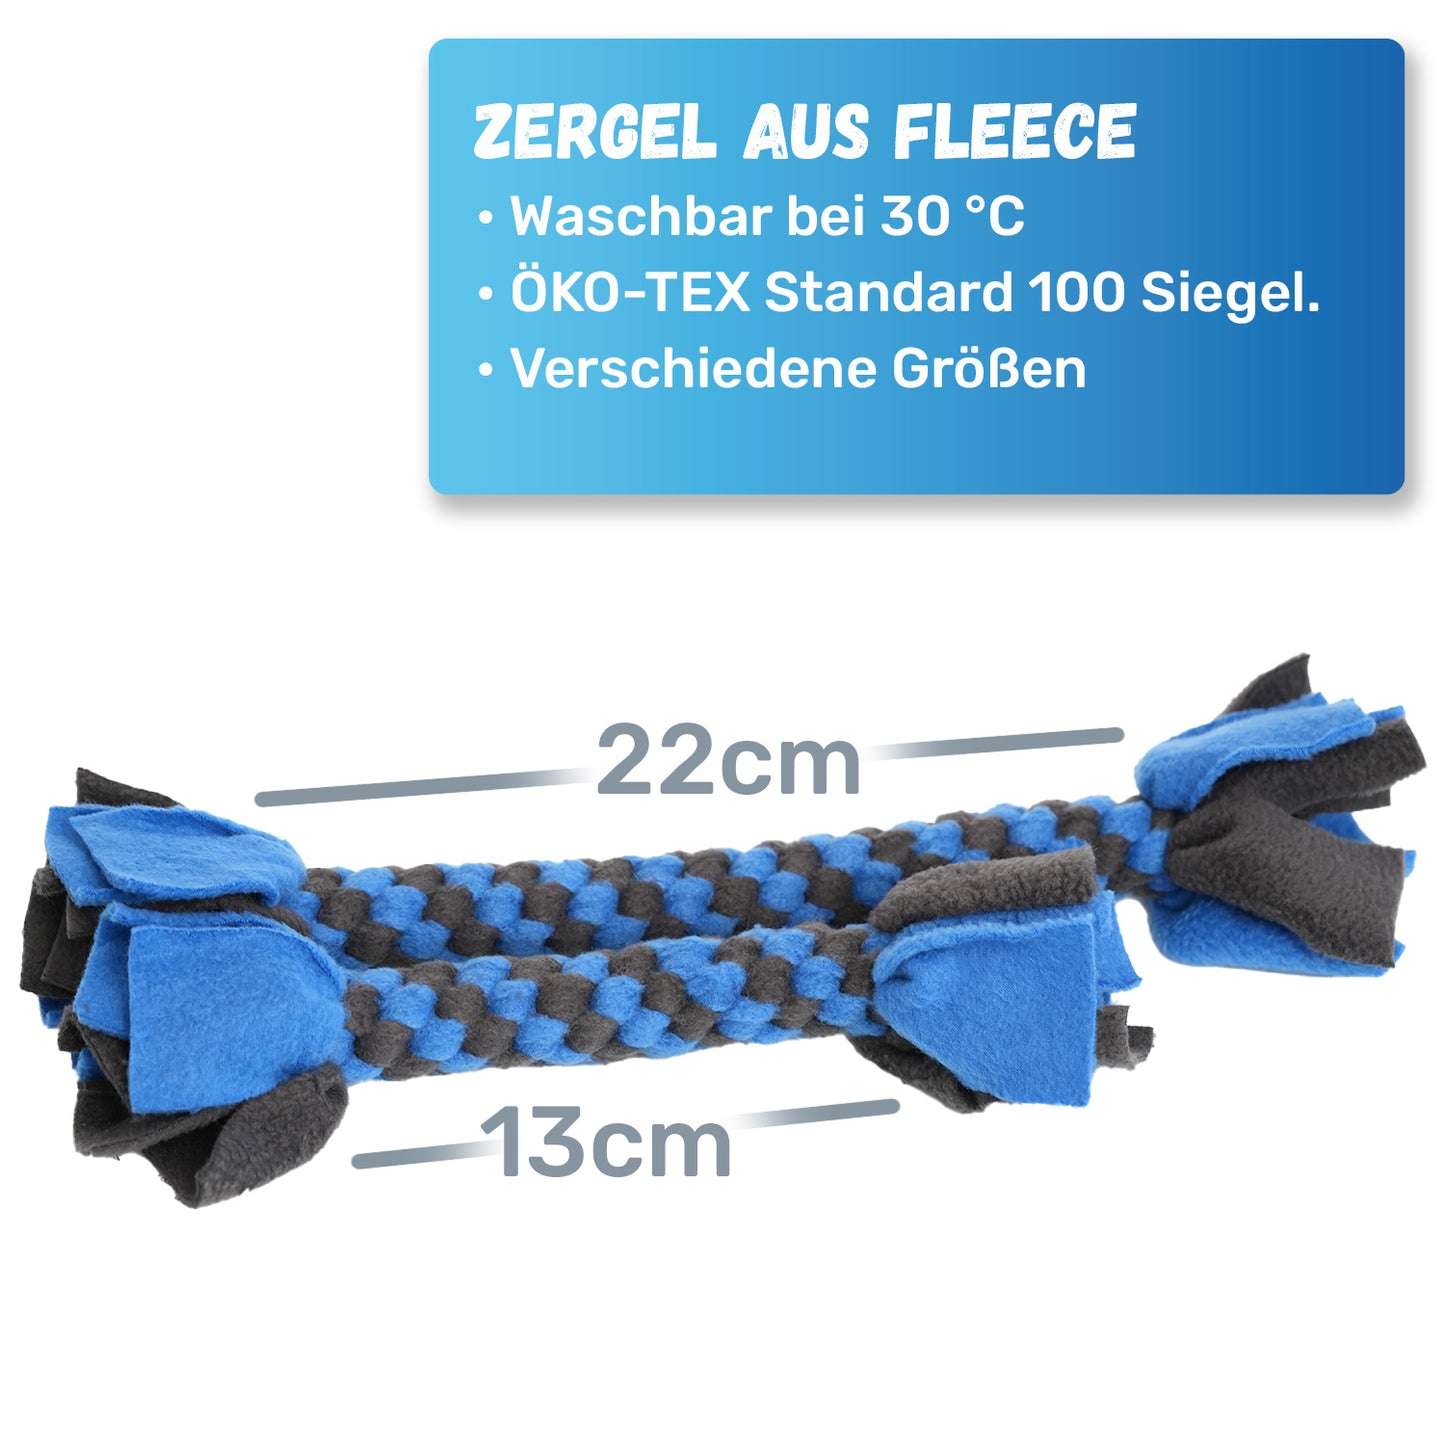 Fleece-Zergel